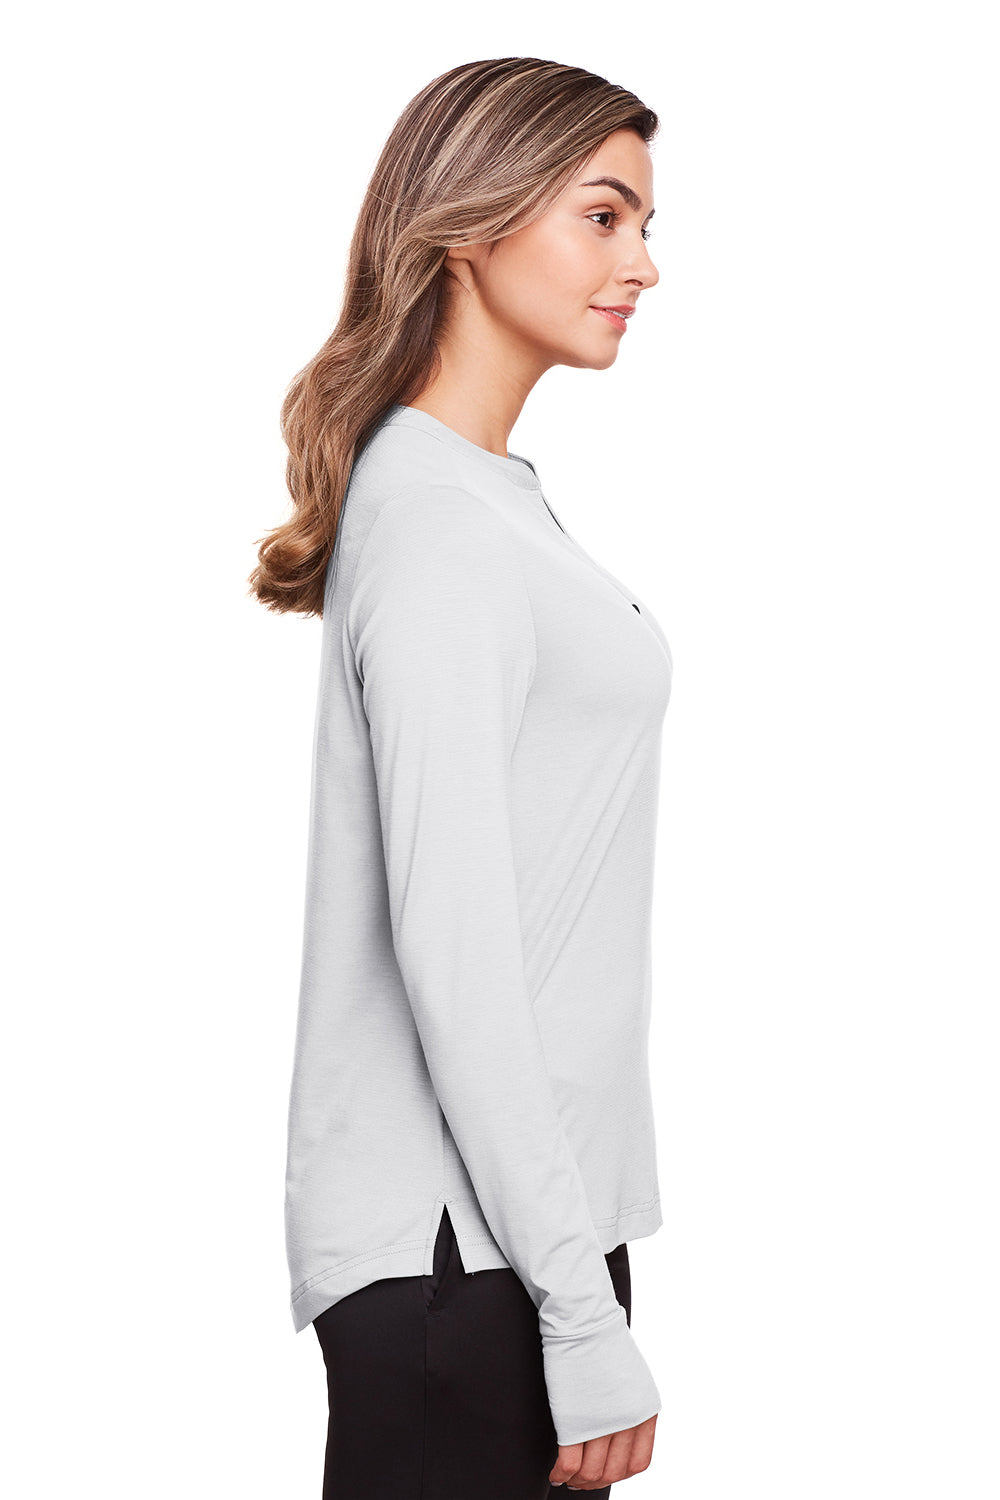 North End NE400W Womens Jaq Performance Moisture Wicking Long Sleeve Polo Shirt Platinum Grey Side